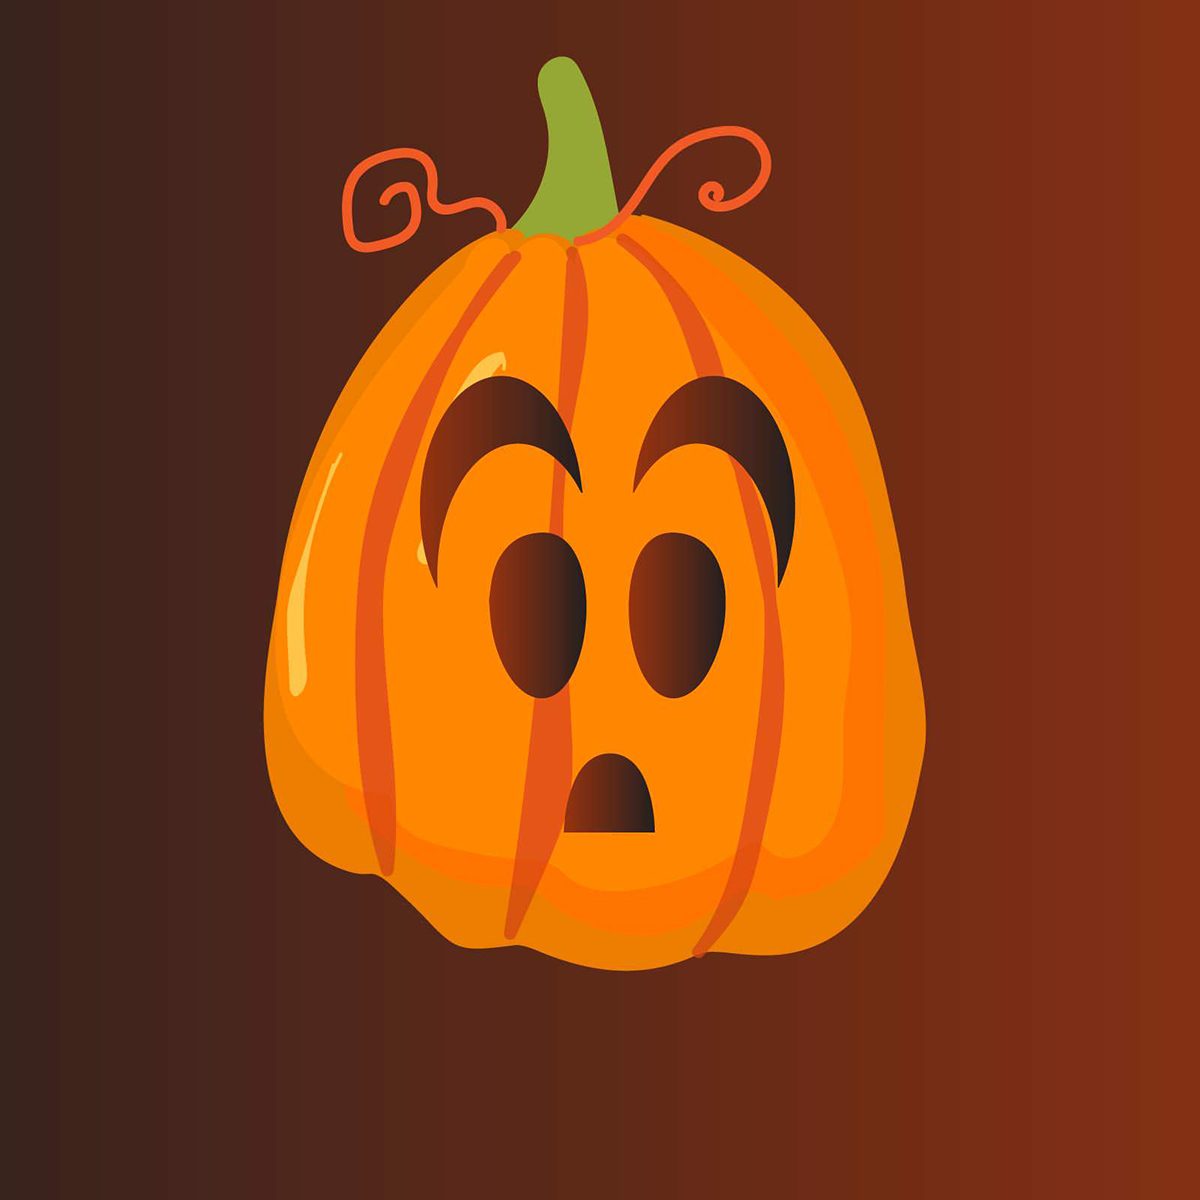 31 Free Pumpkin Carving Stencils to Take Your Jack-o-Lantern to